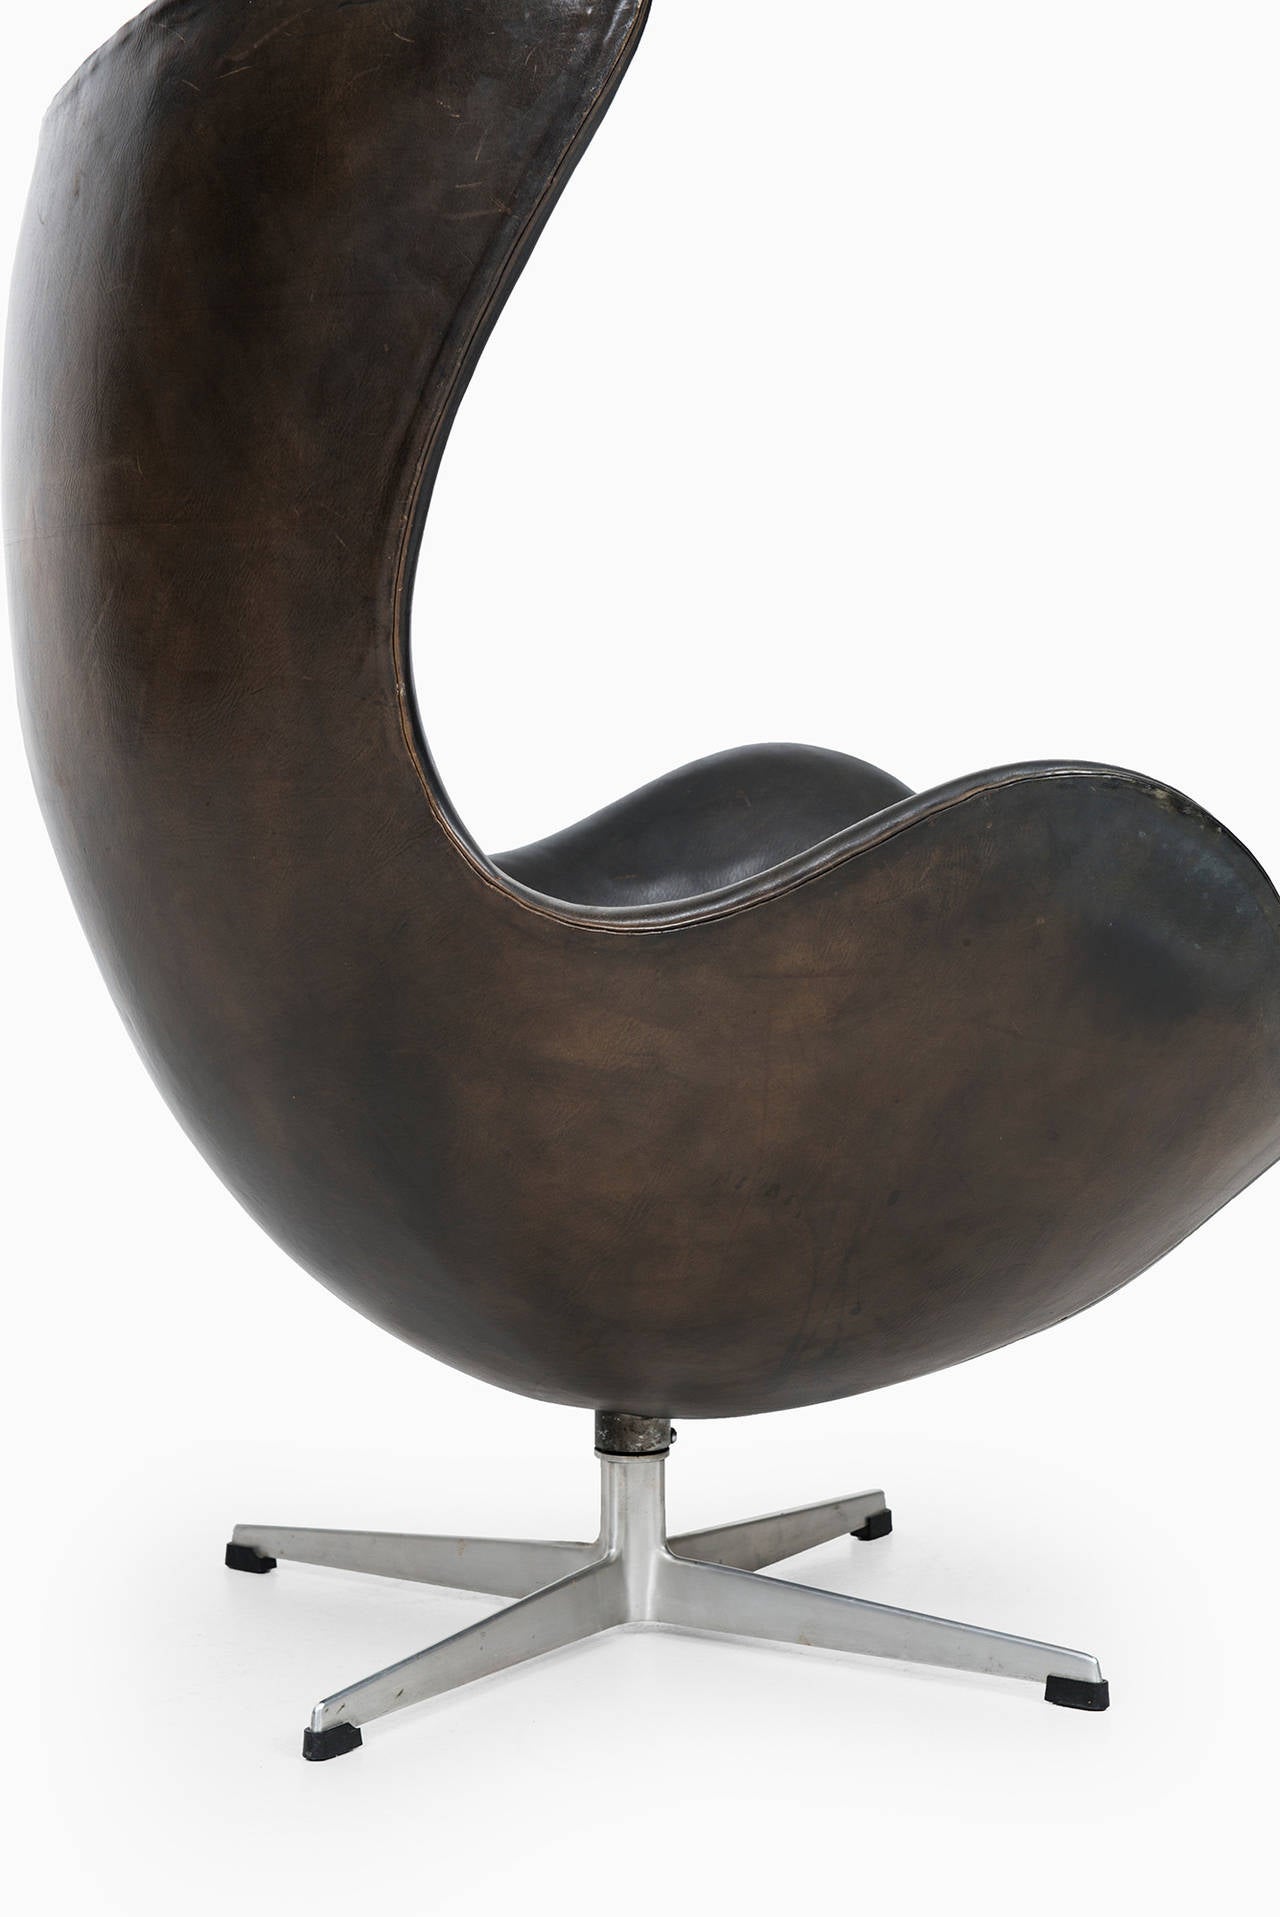 Arne Jacobsen Early Egg Chair in Original Black Leather by Fritz Hansen 2